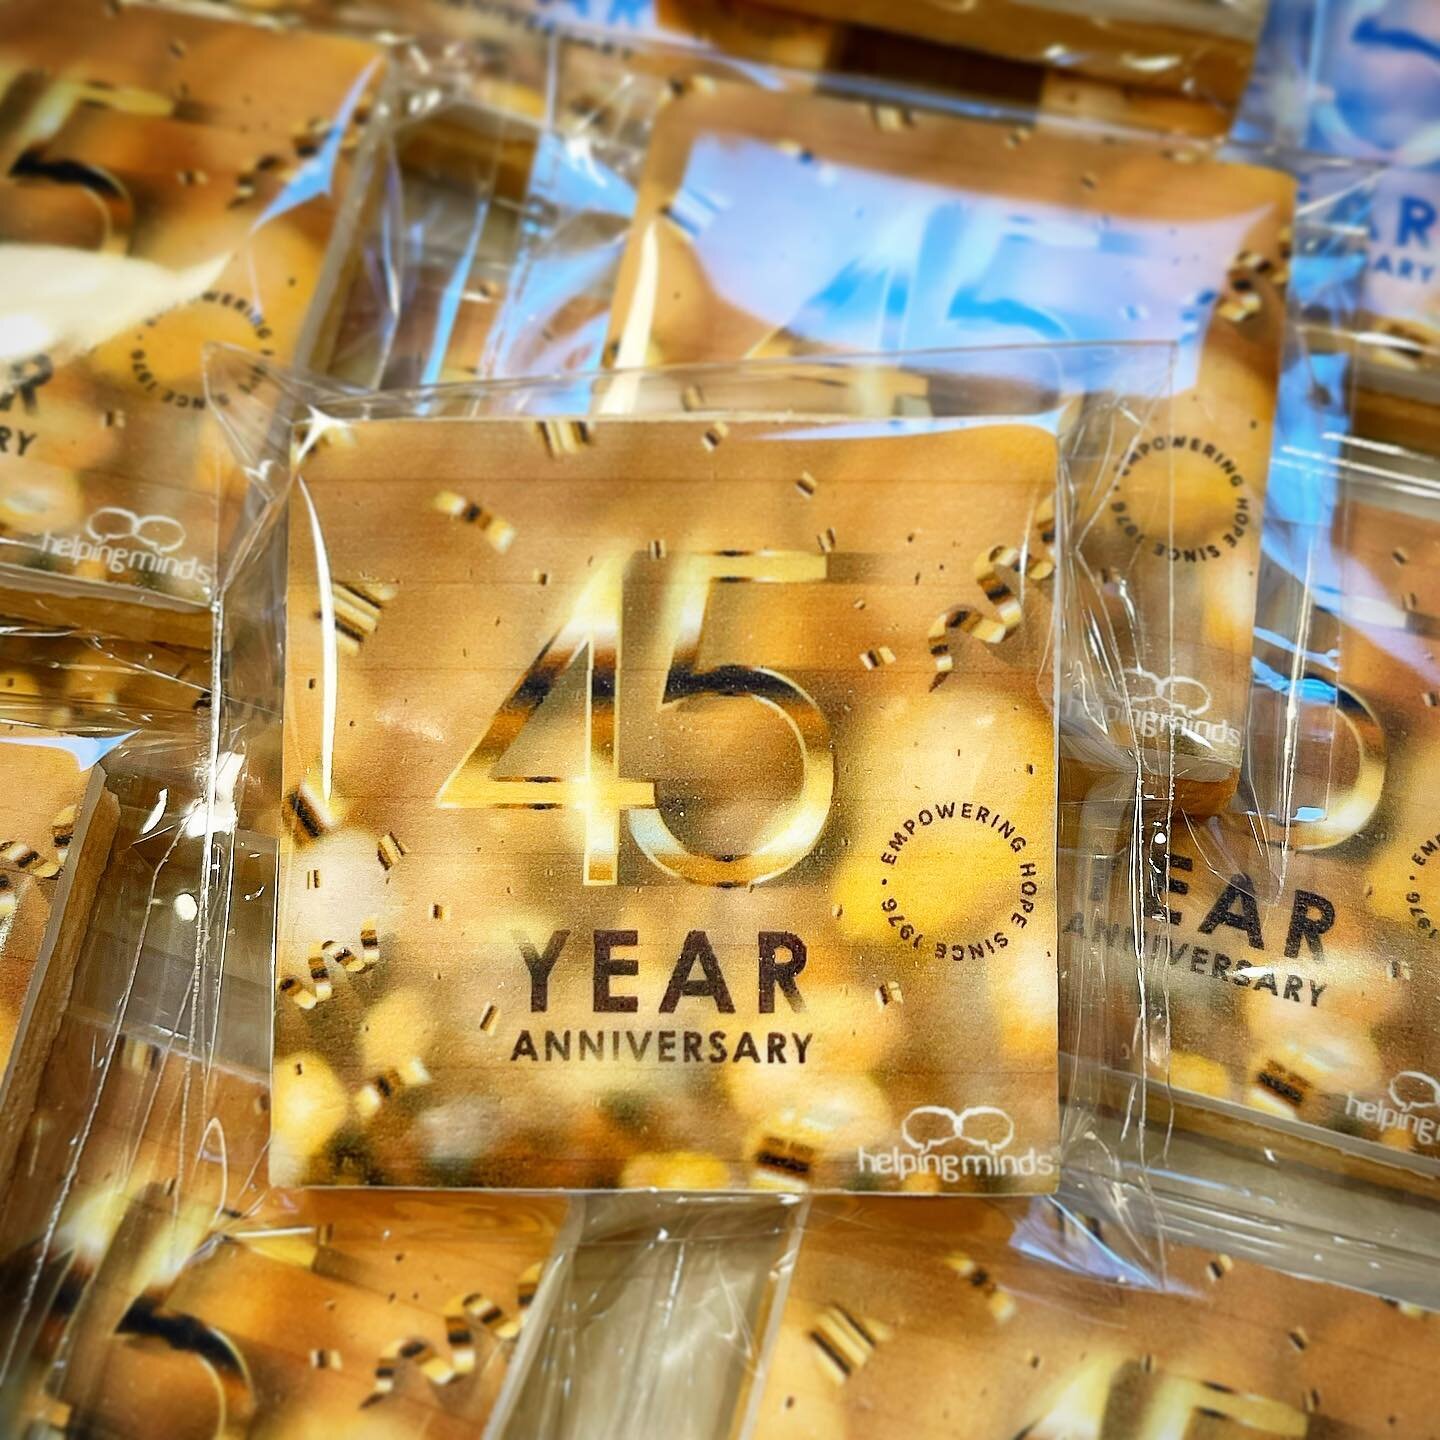 🌟🌟 Happy 45 years! 🌟🌟@helpingmindsau 

Edible image cookies - custom made to suit your logo 🌟